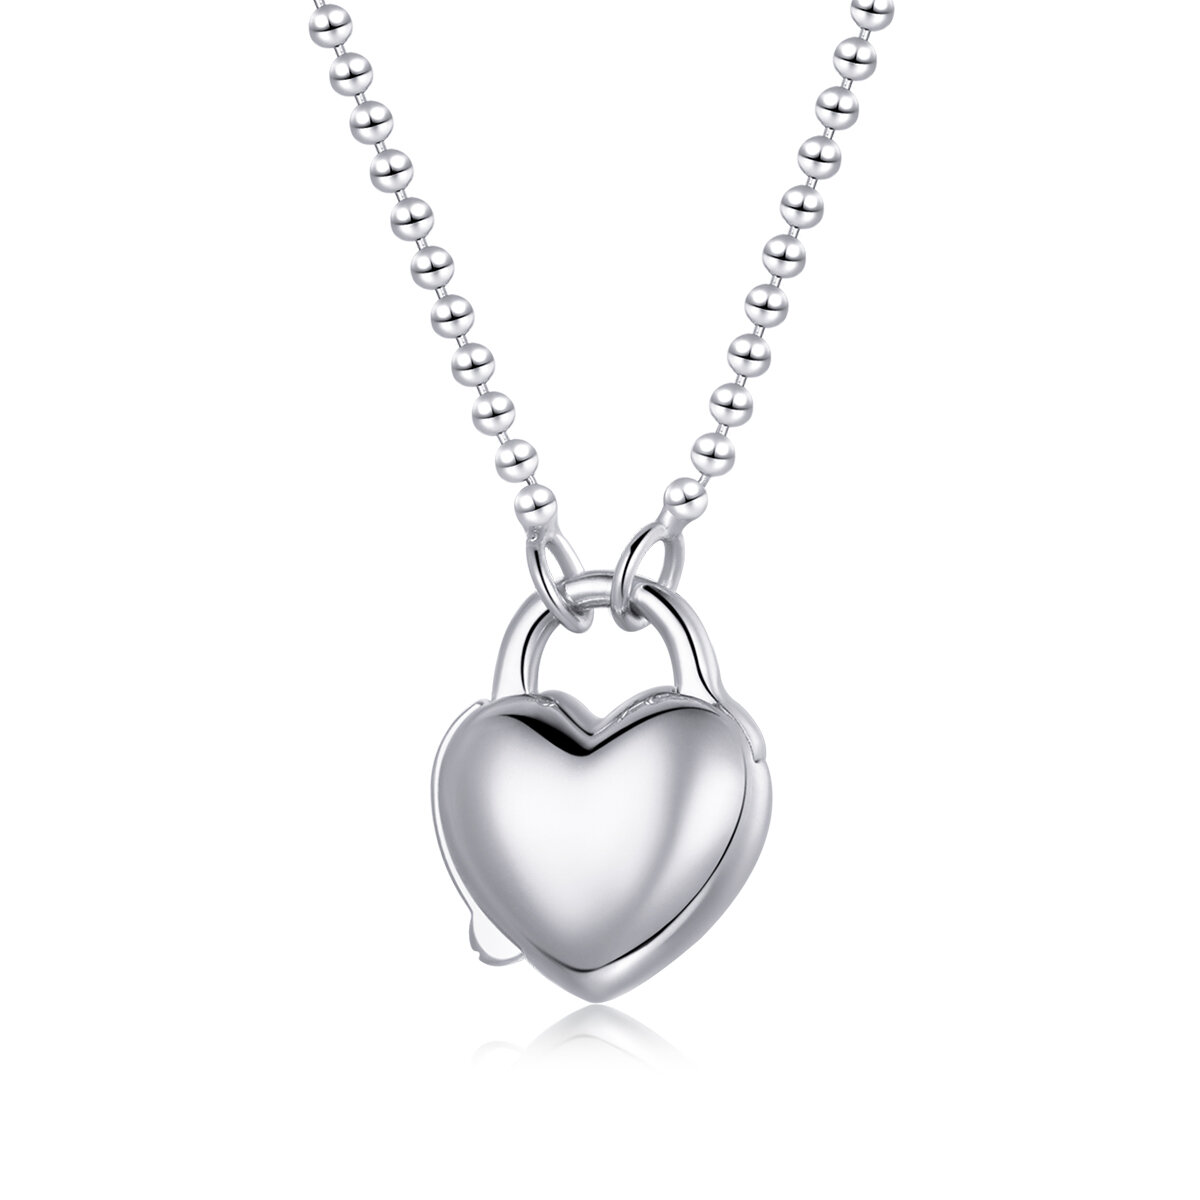 GemKing BSN227 Heart Lock S925 Sterling Silver Necklace